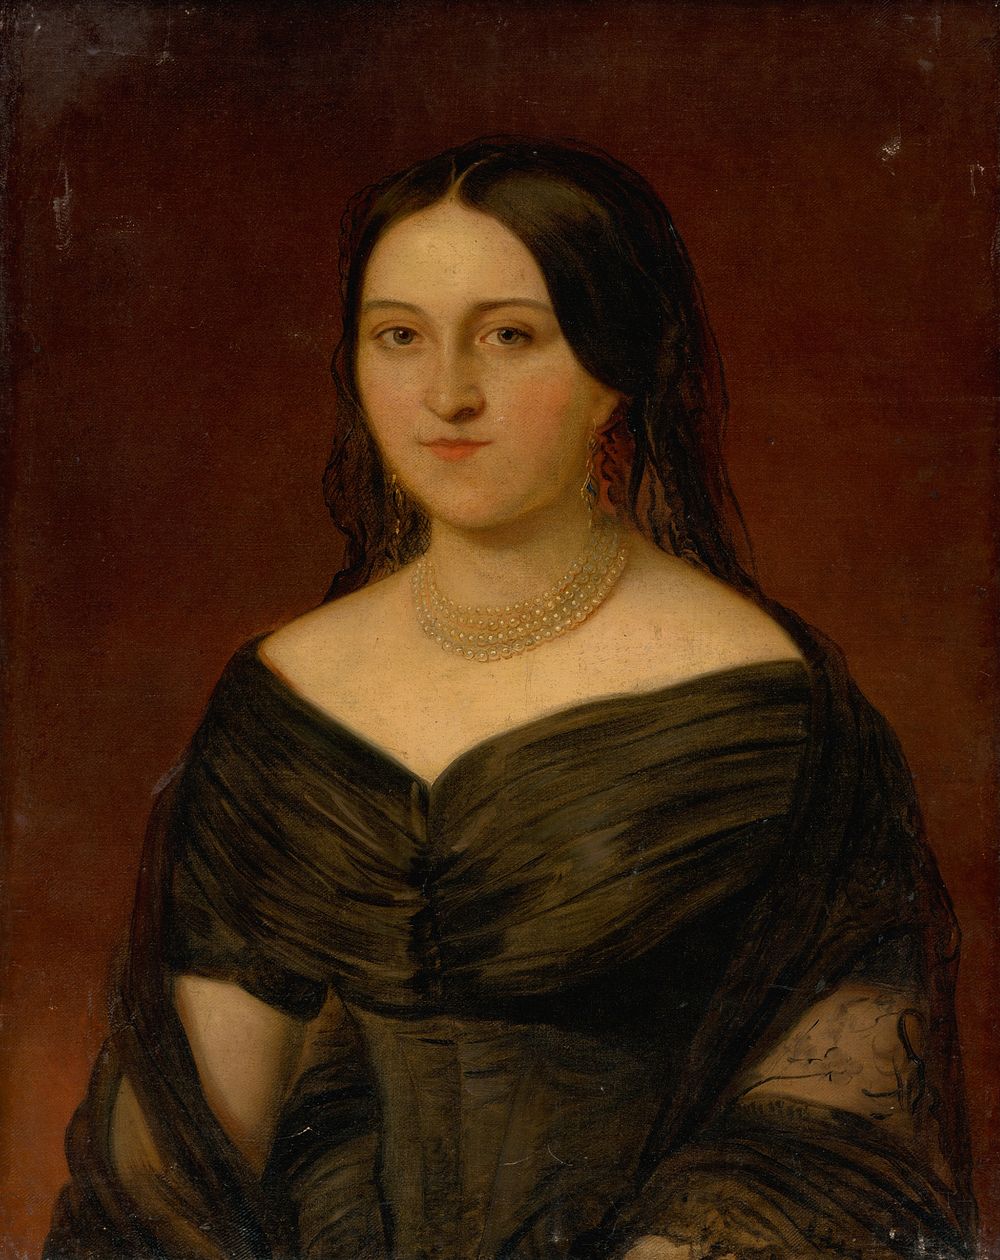 Portrait of a lady in a dark dress